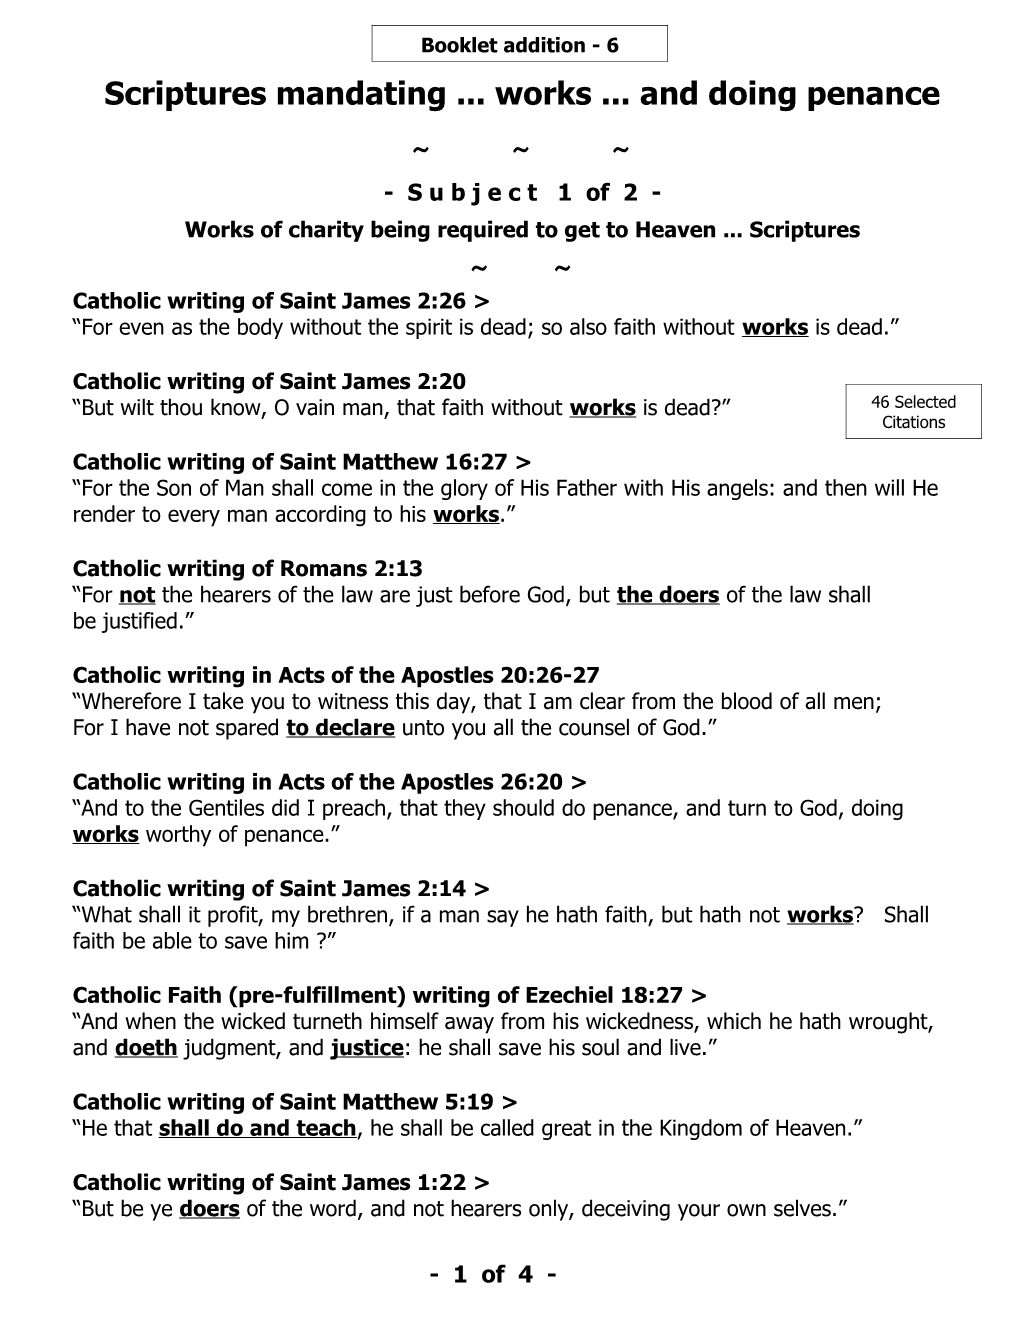 Scriptures Mandating Works and Doing Penance